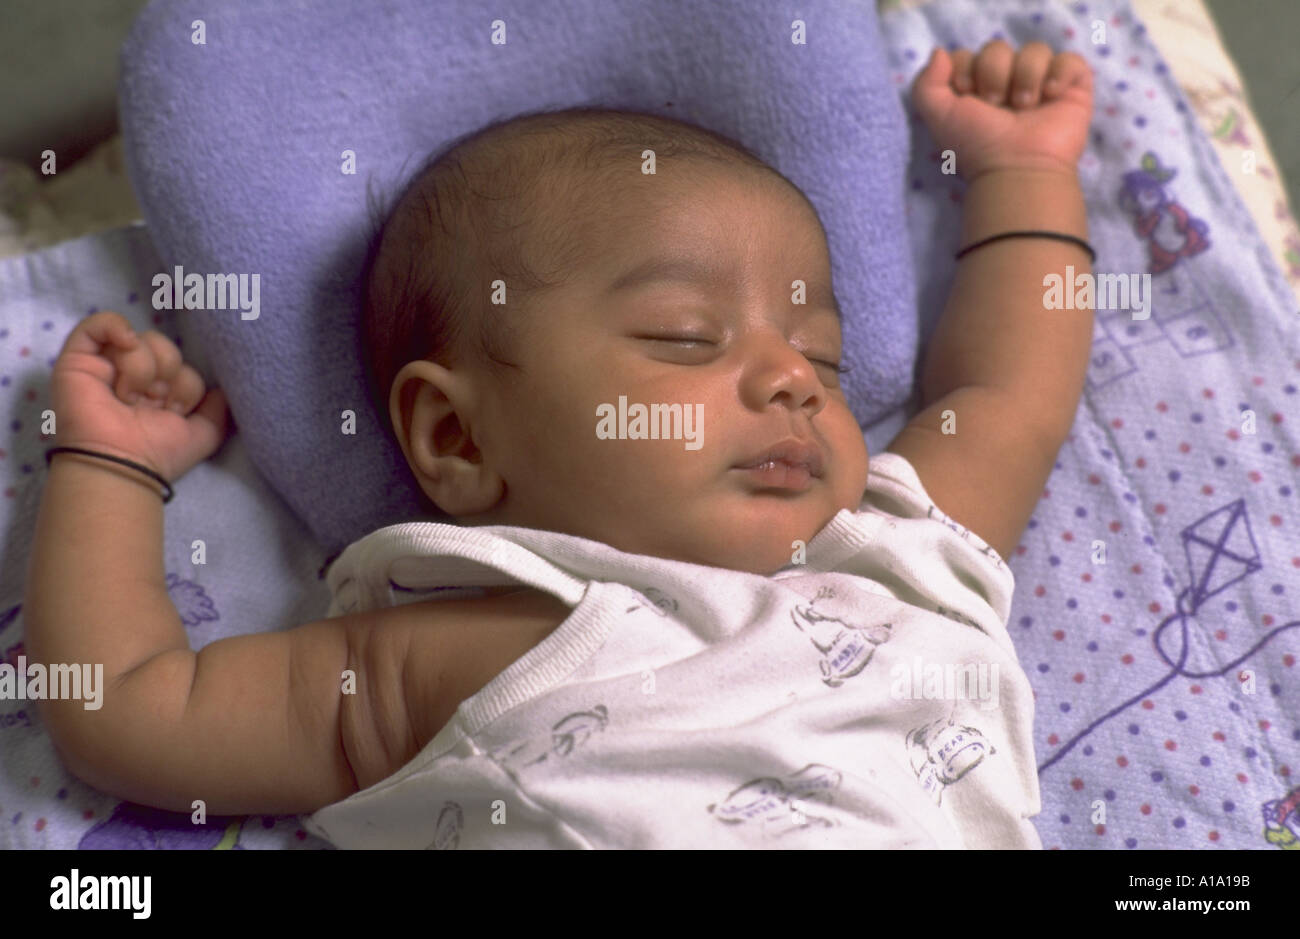 Newborn Indian baby sleeping peacefully Stock Photo